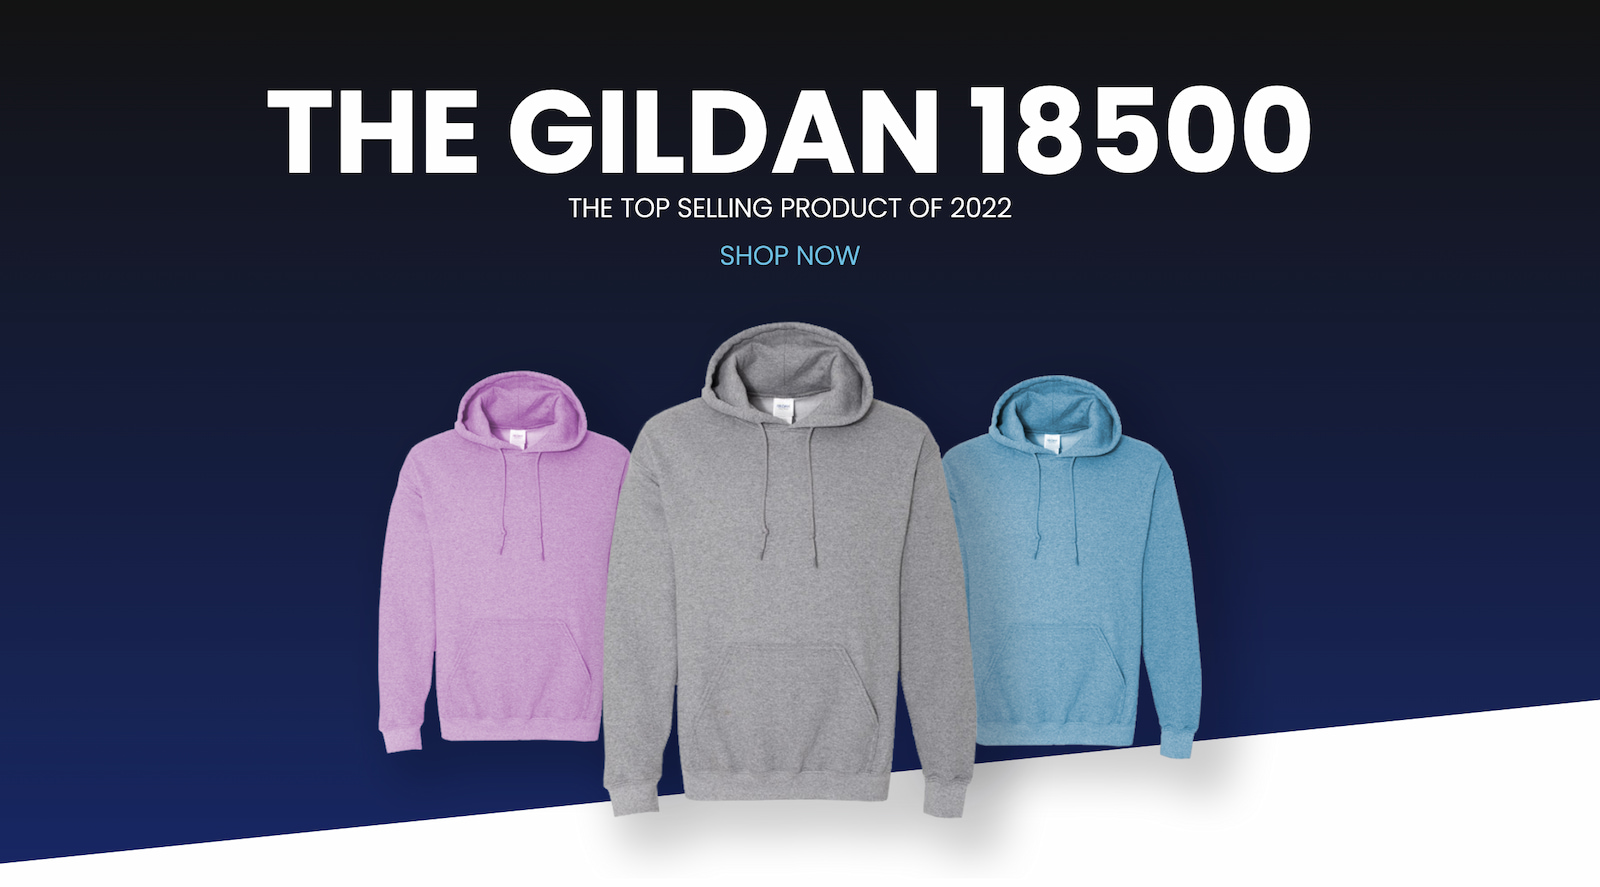 3 Gildan 18500 hoodies